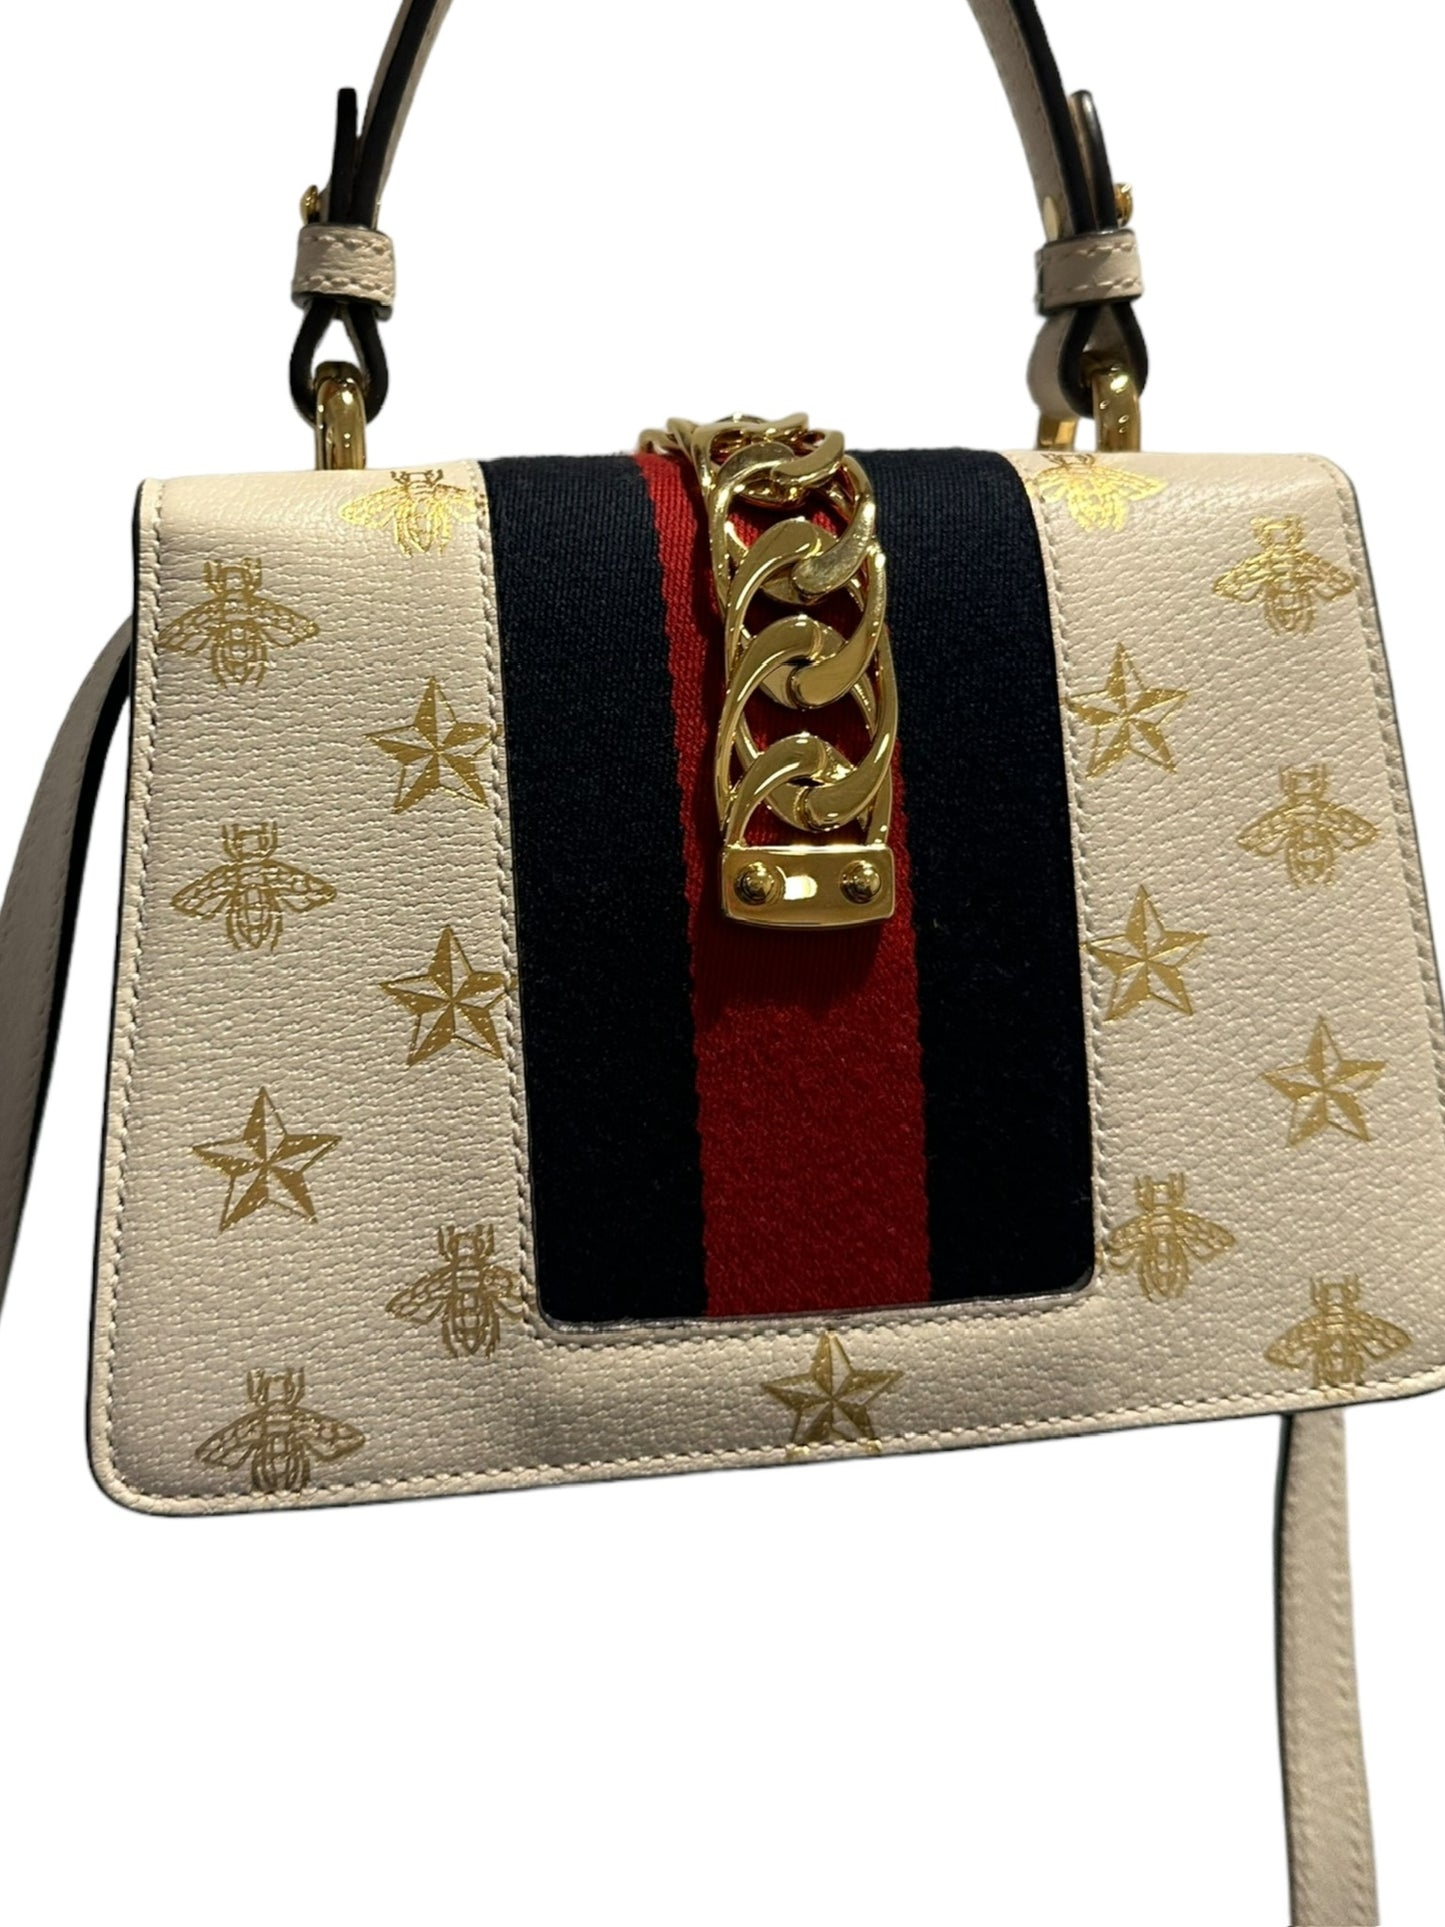 GUCCI - Sylvie Bee Star Mini Top Handle Bag